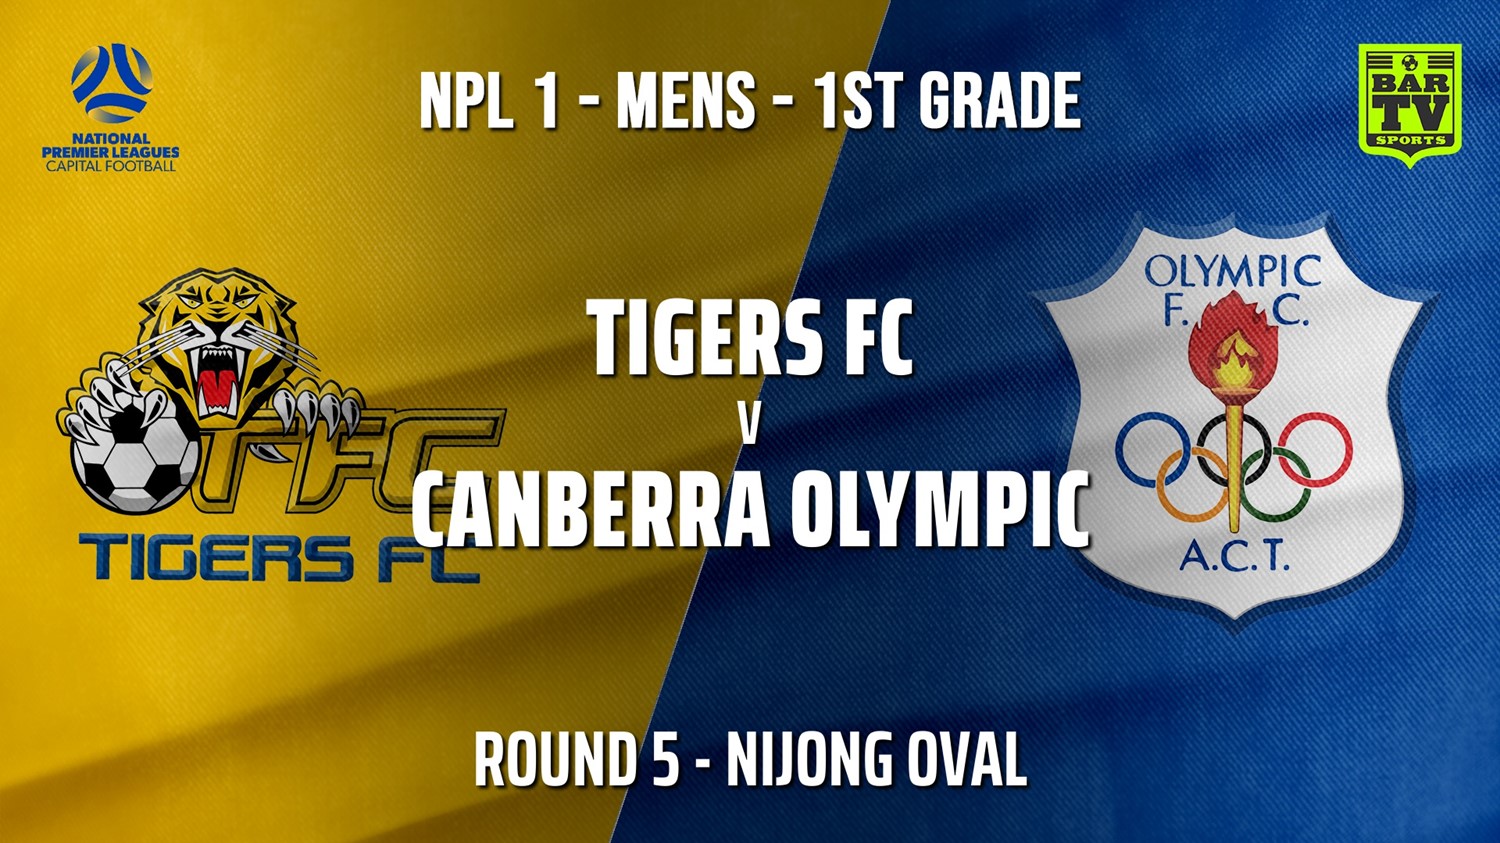 210509-NPL - CAPITAL Round 5 - Tigers FC v Canberra Olympic FC Minigame Slate Image